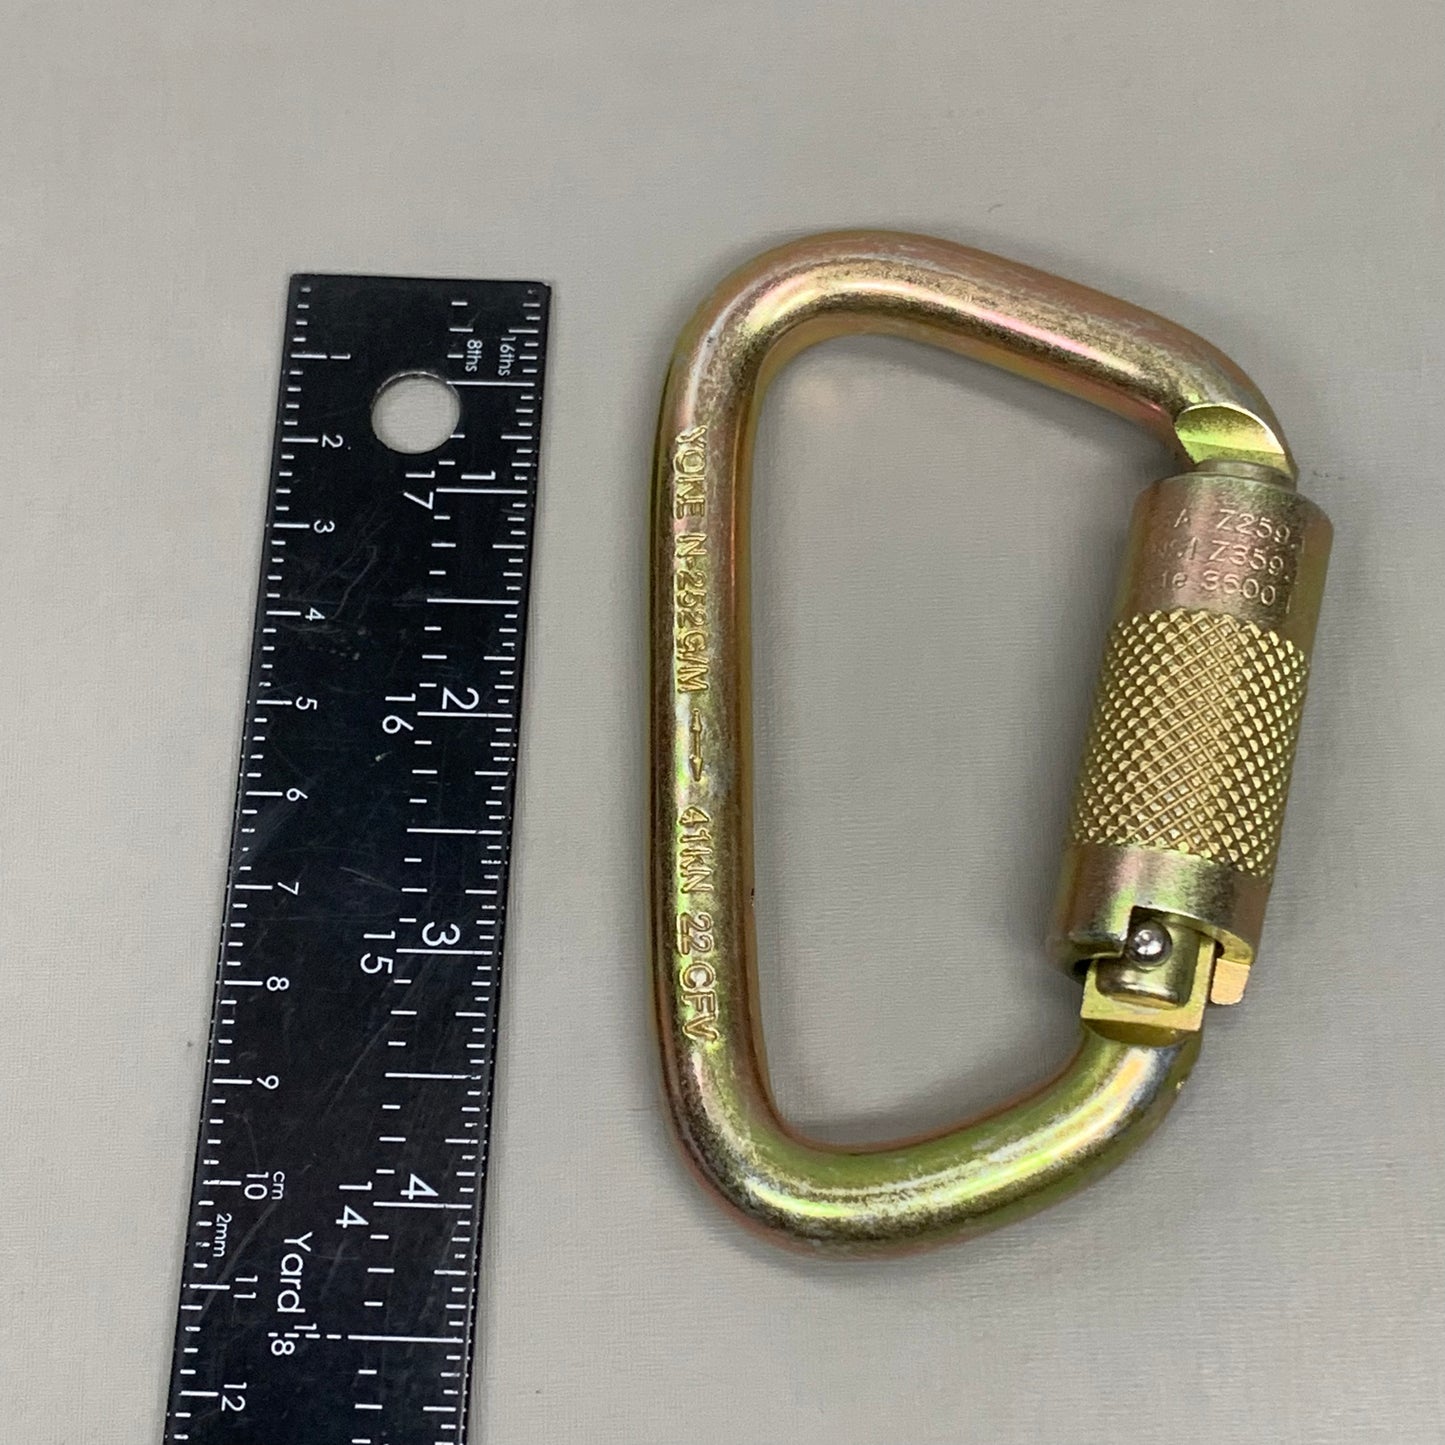 YOKE Auto Locking Carabiner N-256G/M Steel (New)